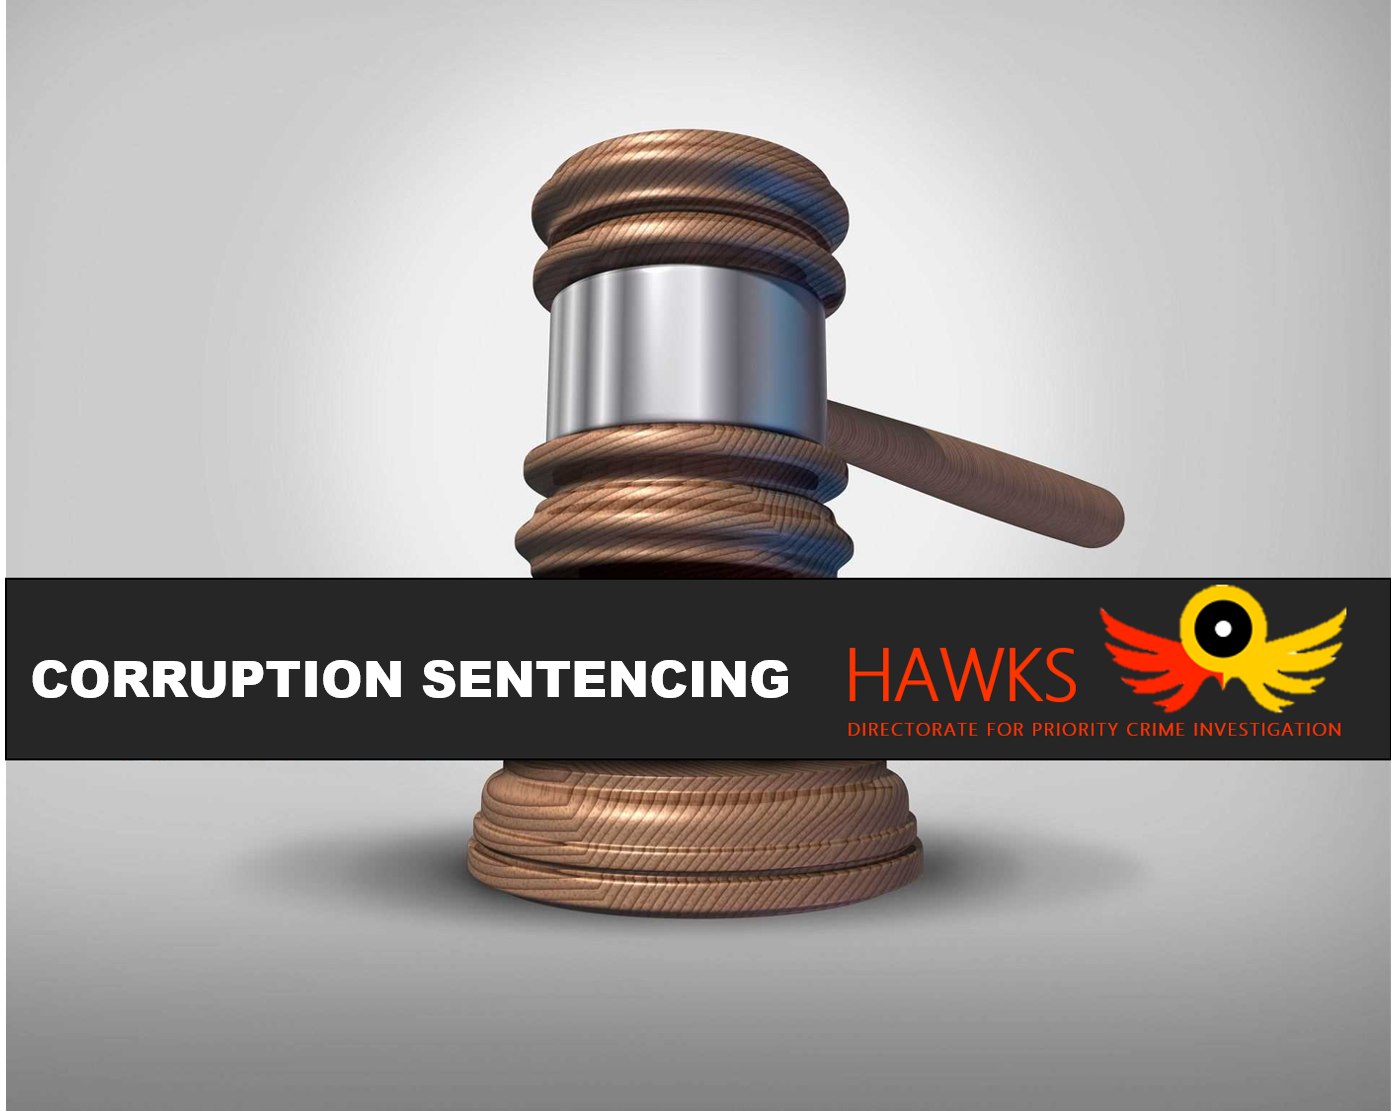 Hawks deal corruption at Ficksburg Port of Entry a blow